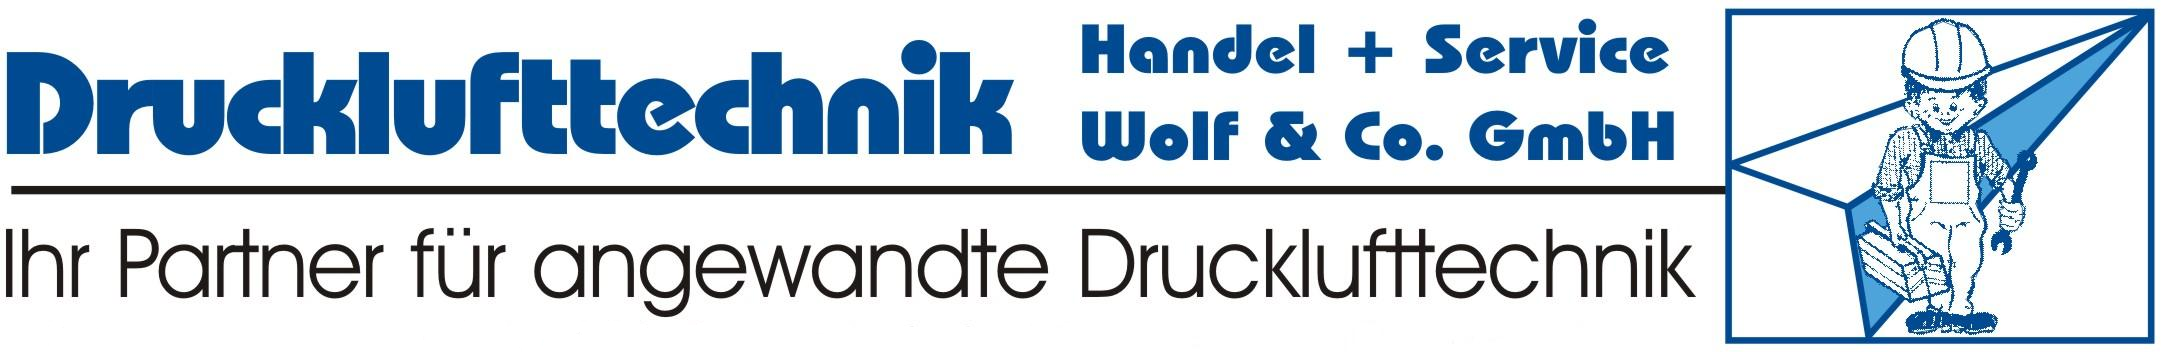 Drucklufttechnik Handel + Service Wolf & Co.GmbH